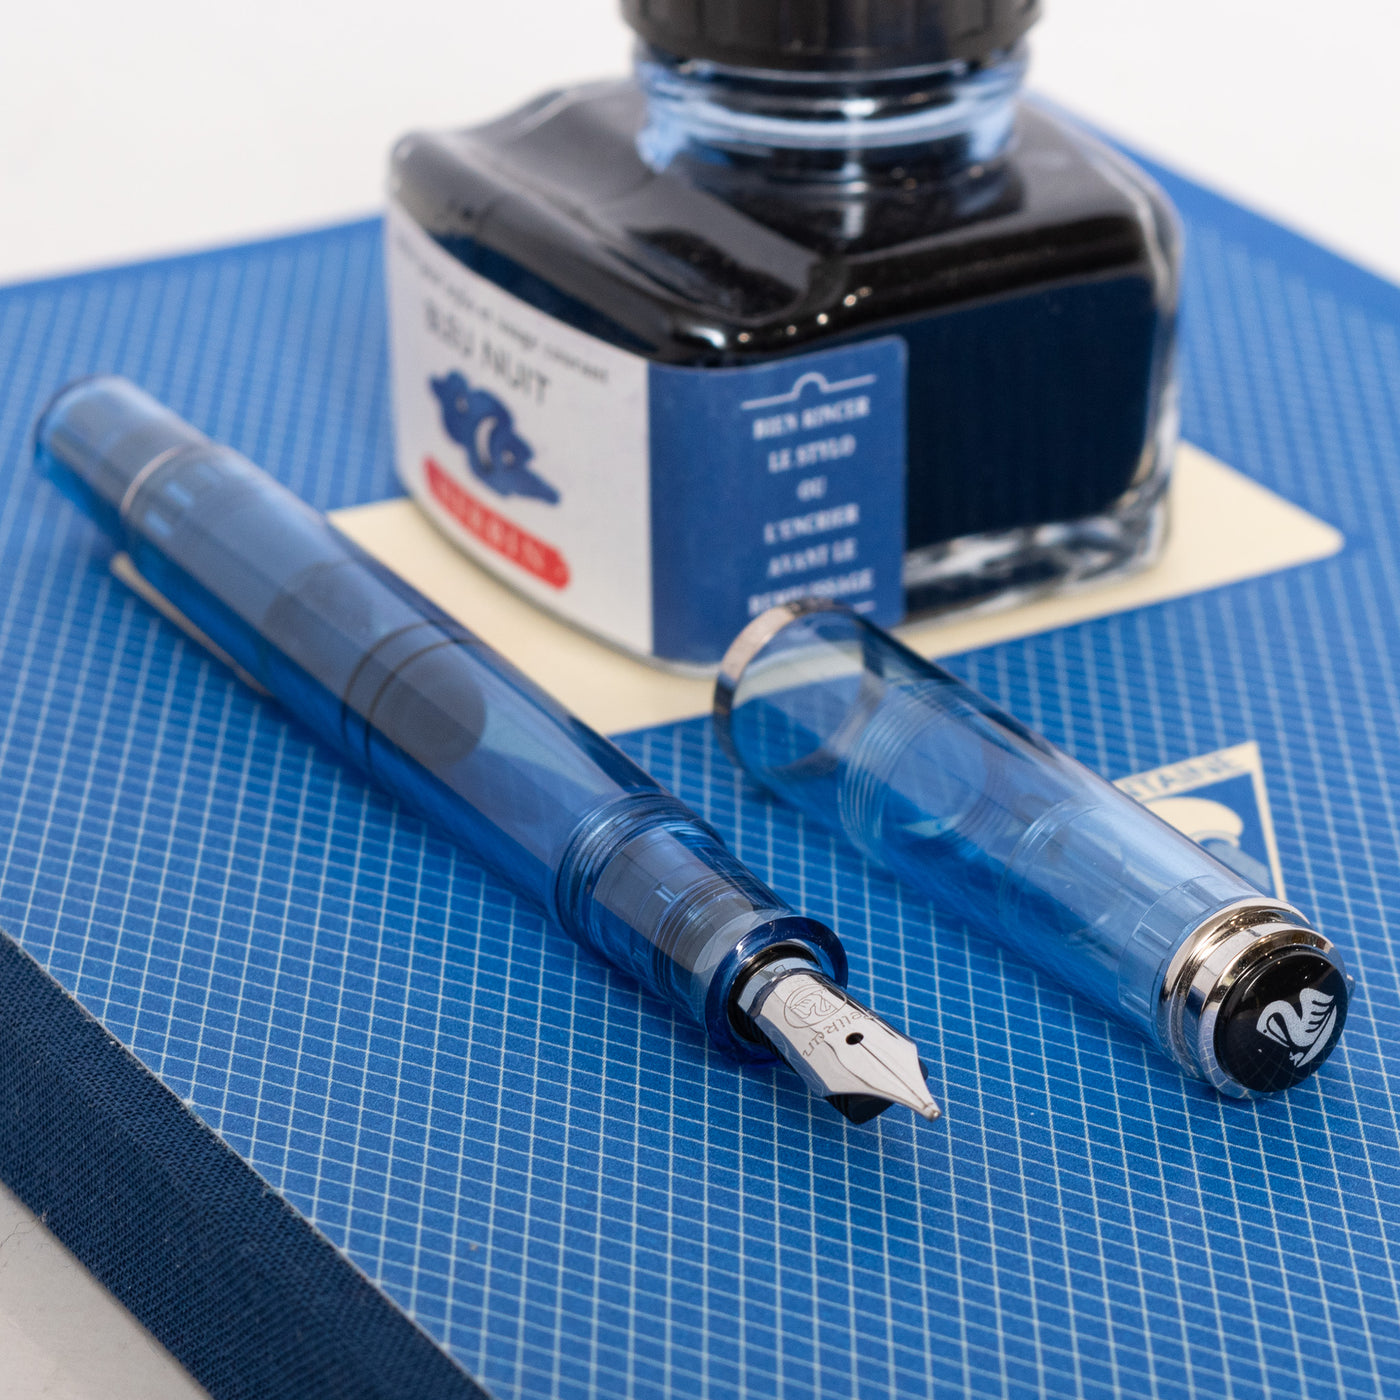 Pelikan M205 Blue Demonstrator Fountain Pen piston filled